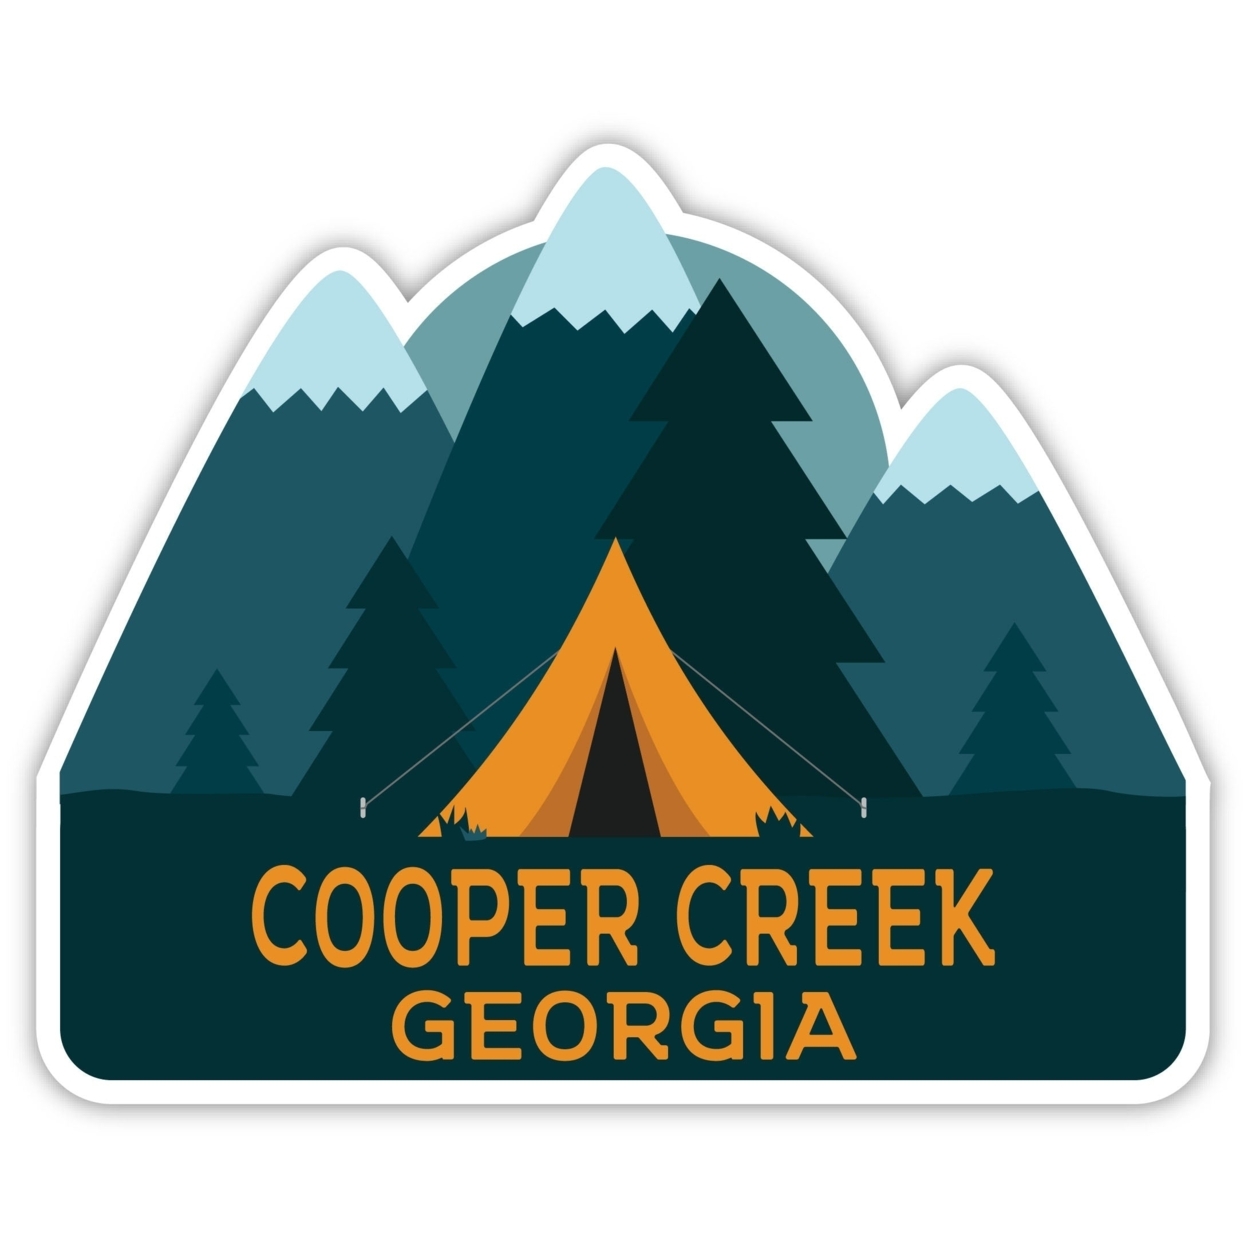 Cooper Creek Georgia Souvenir Decorative Stickers (Choose Theme And Size) - 4-Pack, 2-Inch, Tent